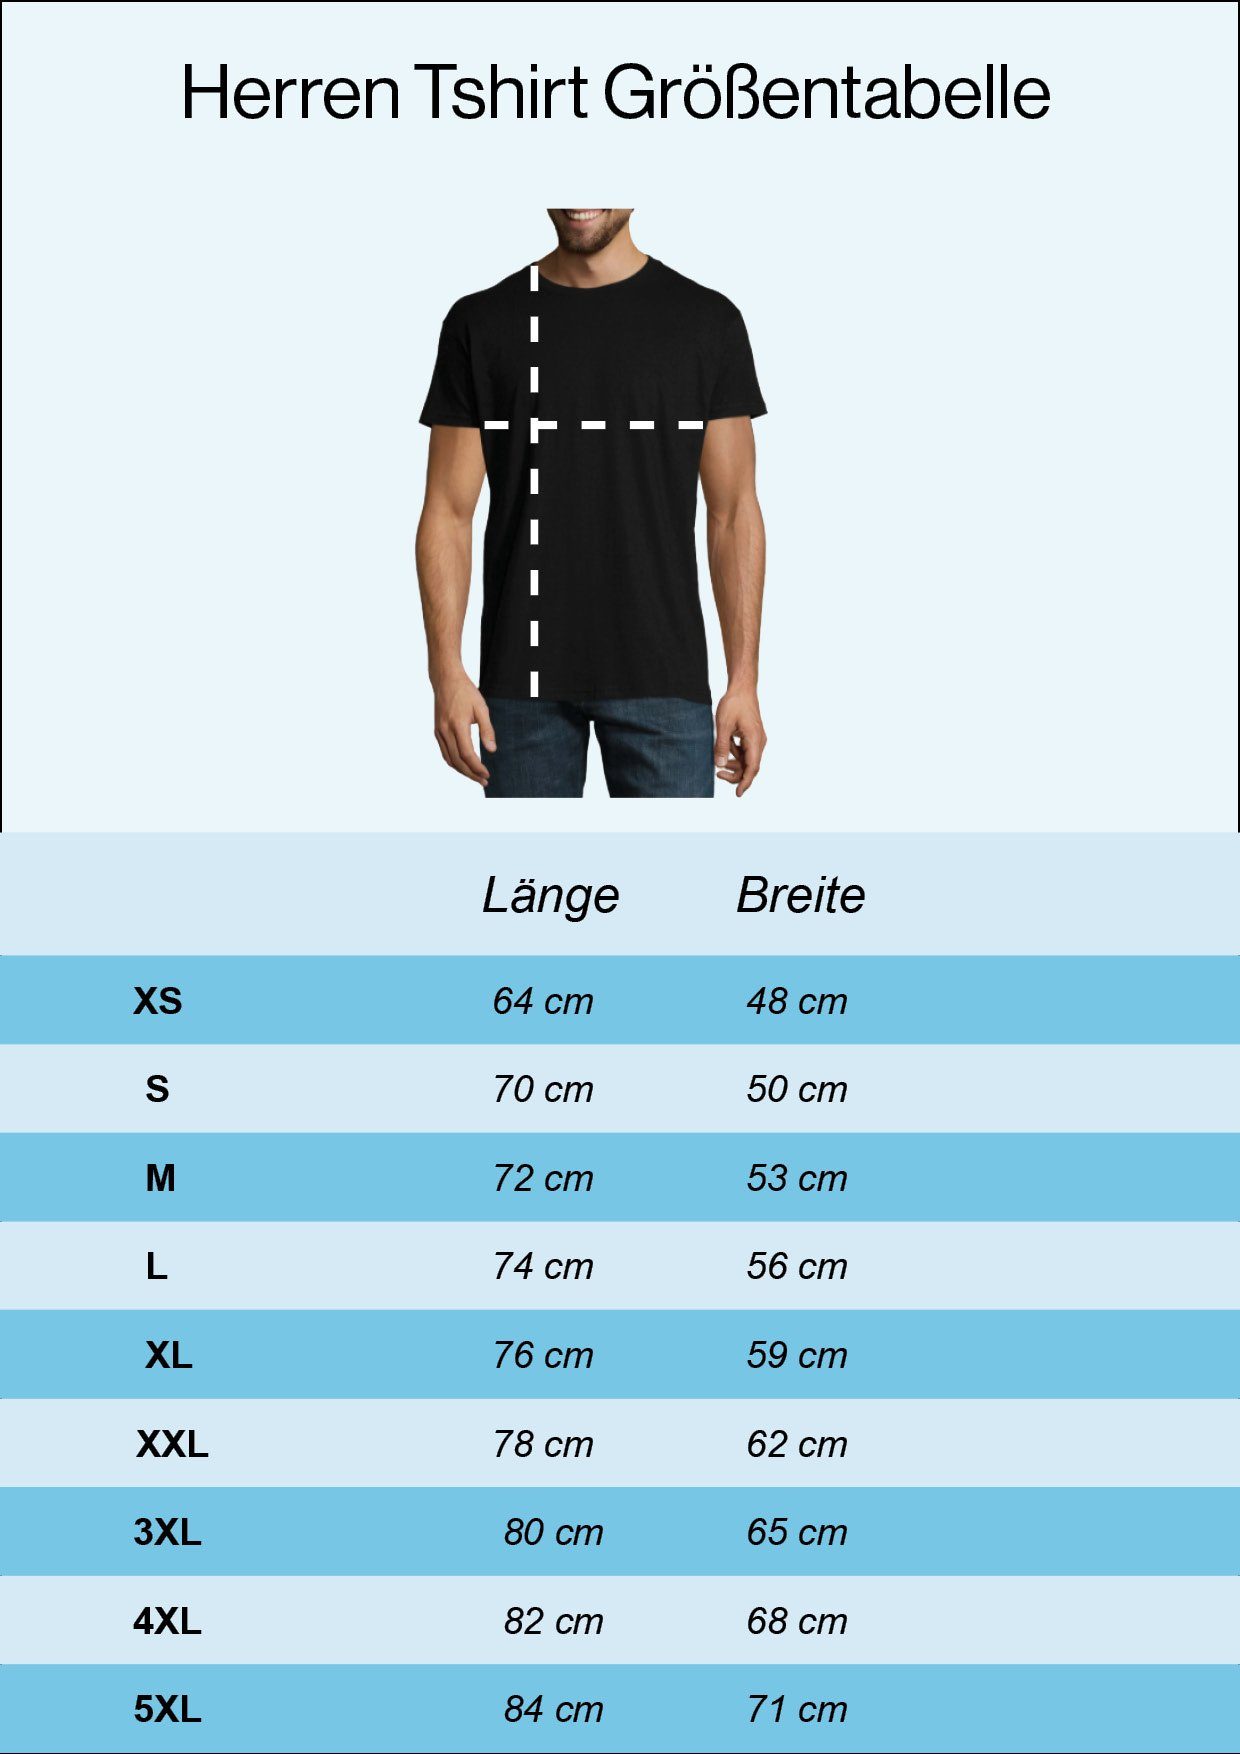 Youth Motiv Gaming Wario Herren Designz Shirt T-Shirt Navyblau mit trendgiem